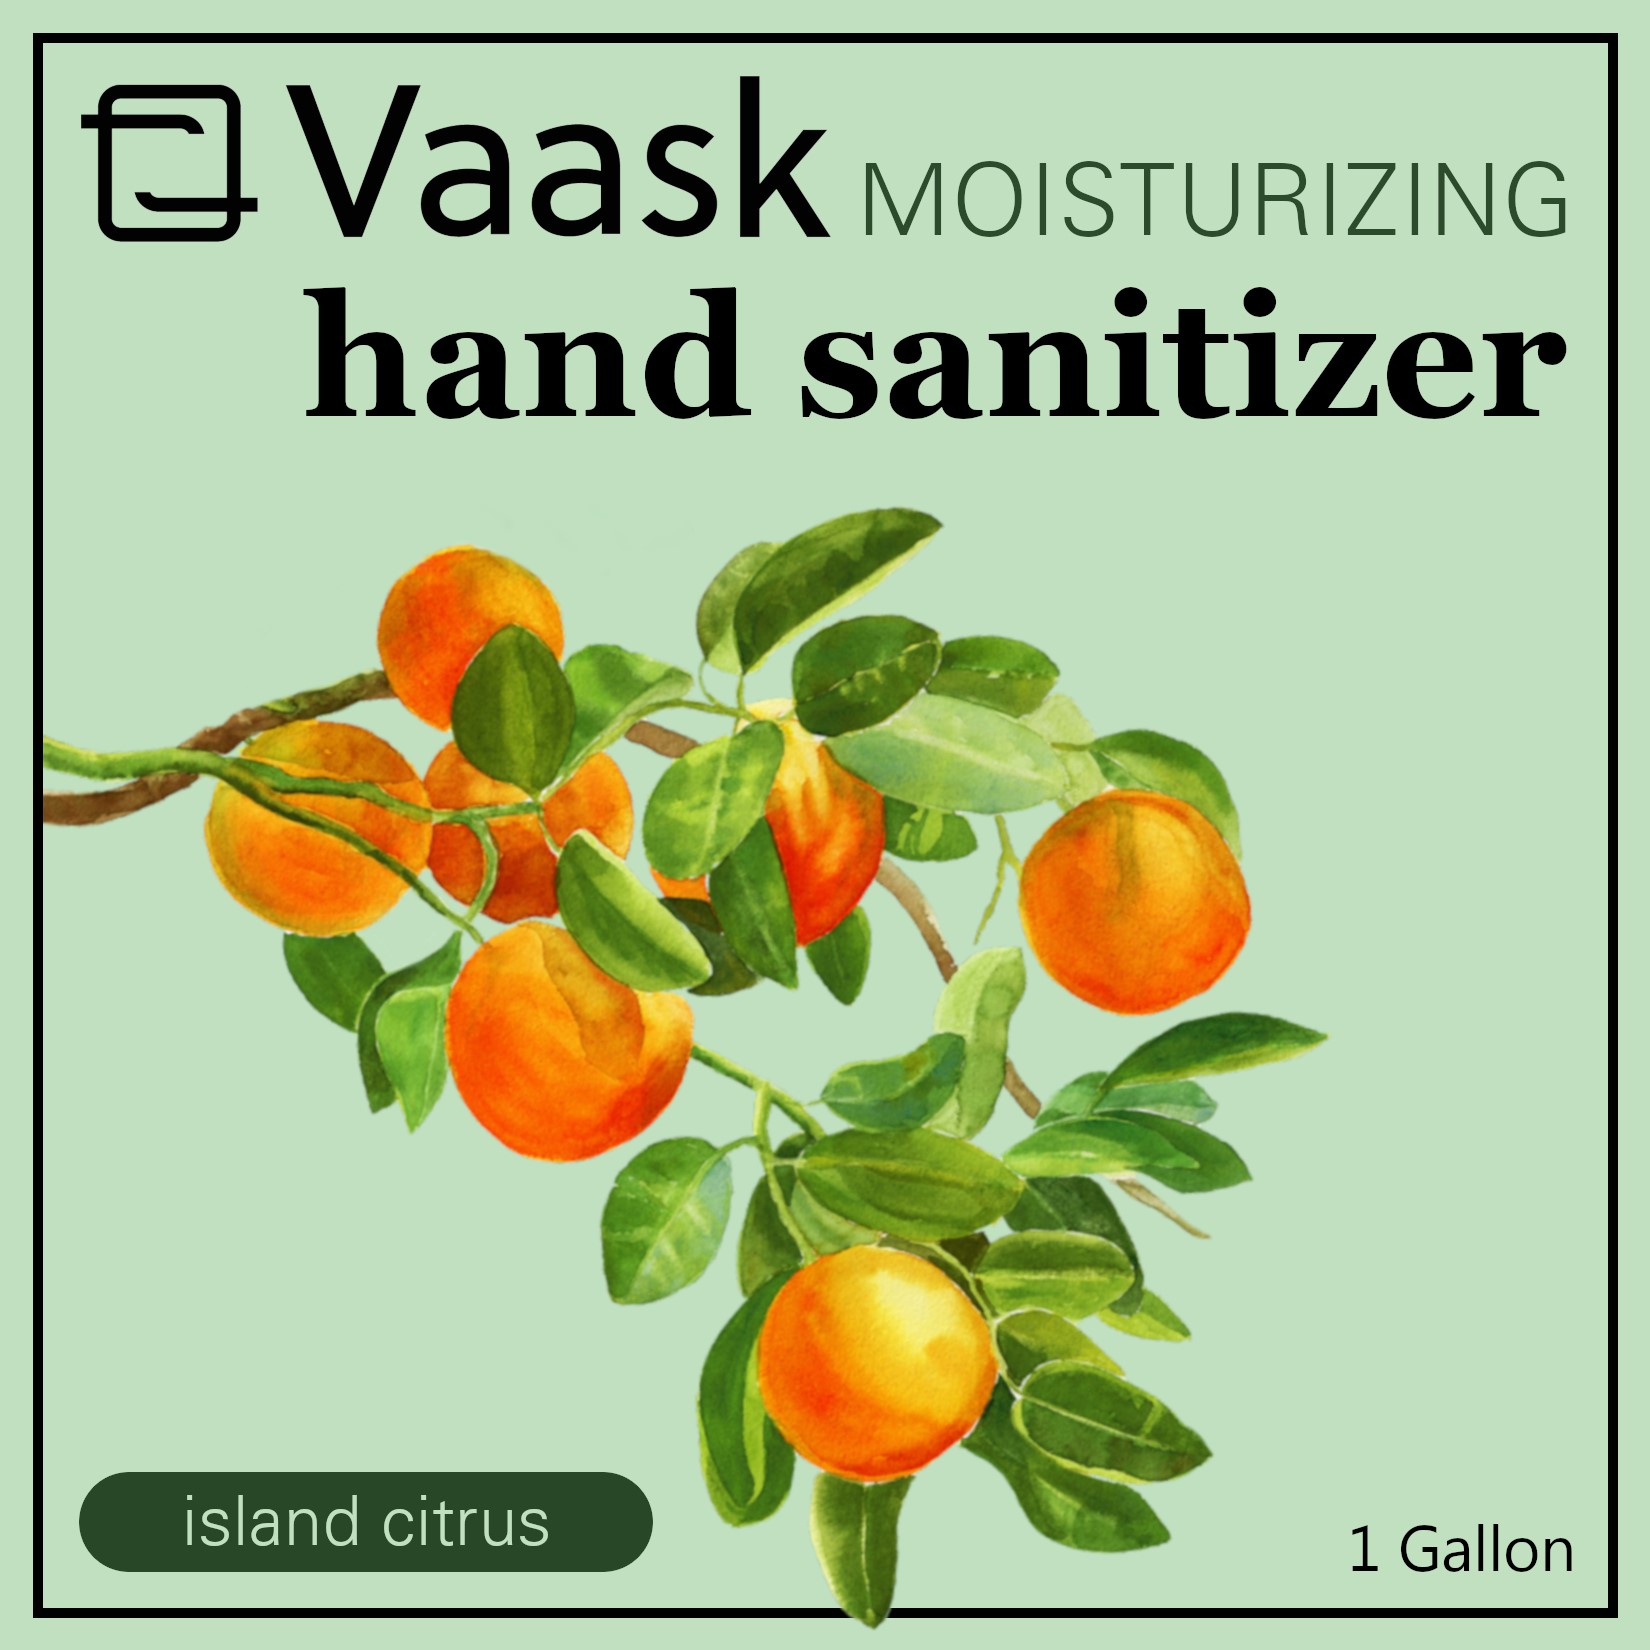 Vaask Moisturizing hand sanitizer